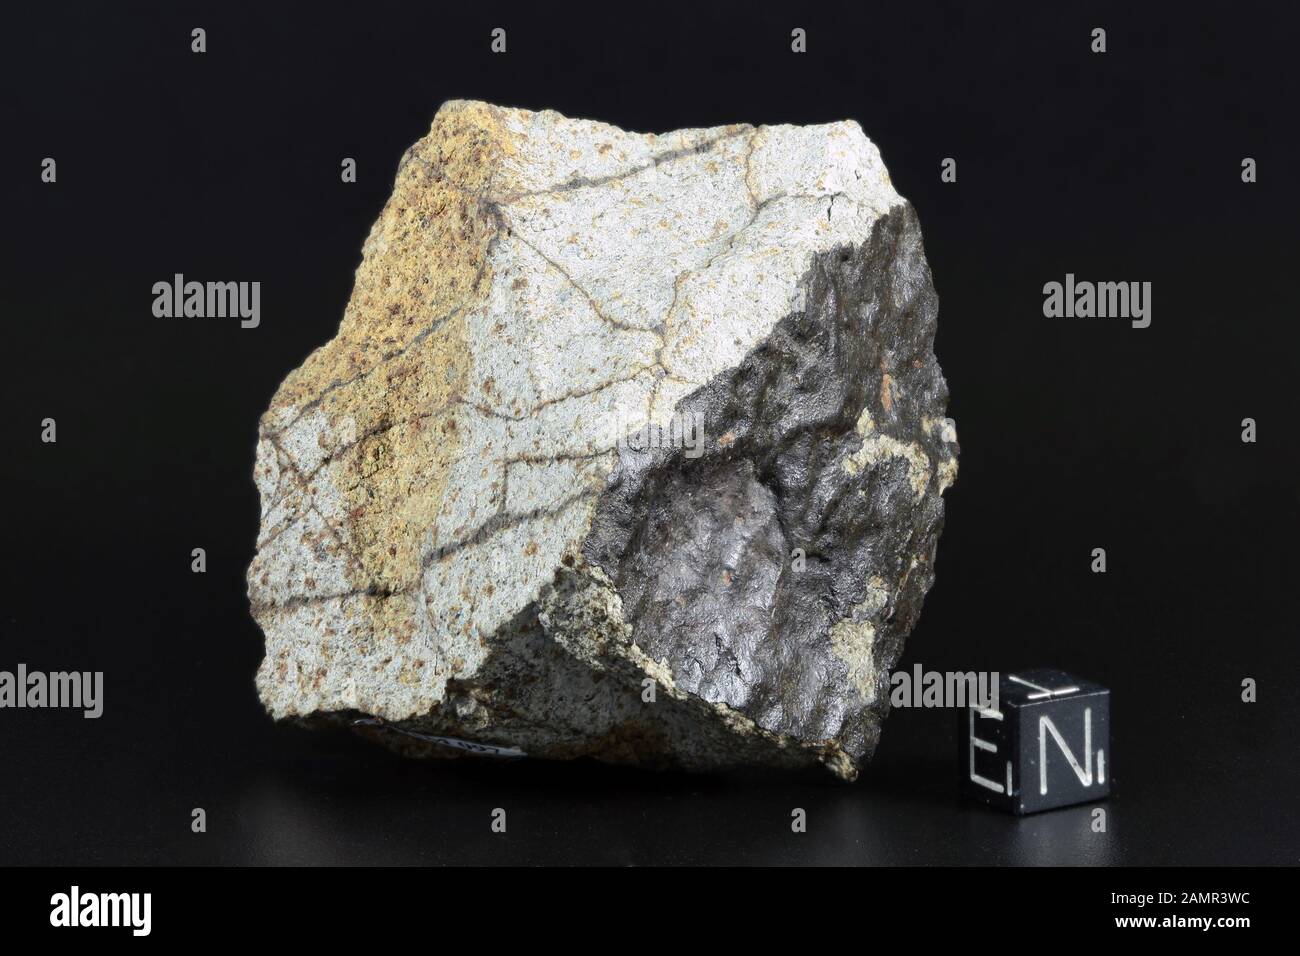 GIRGENTI - Fall 10 February 1853, Girgenti (Agrigento), Sicily, Italy. Chondrite L6 veined. Total mass 14.475 kg. Stock Photo